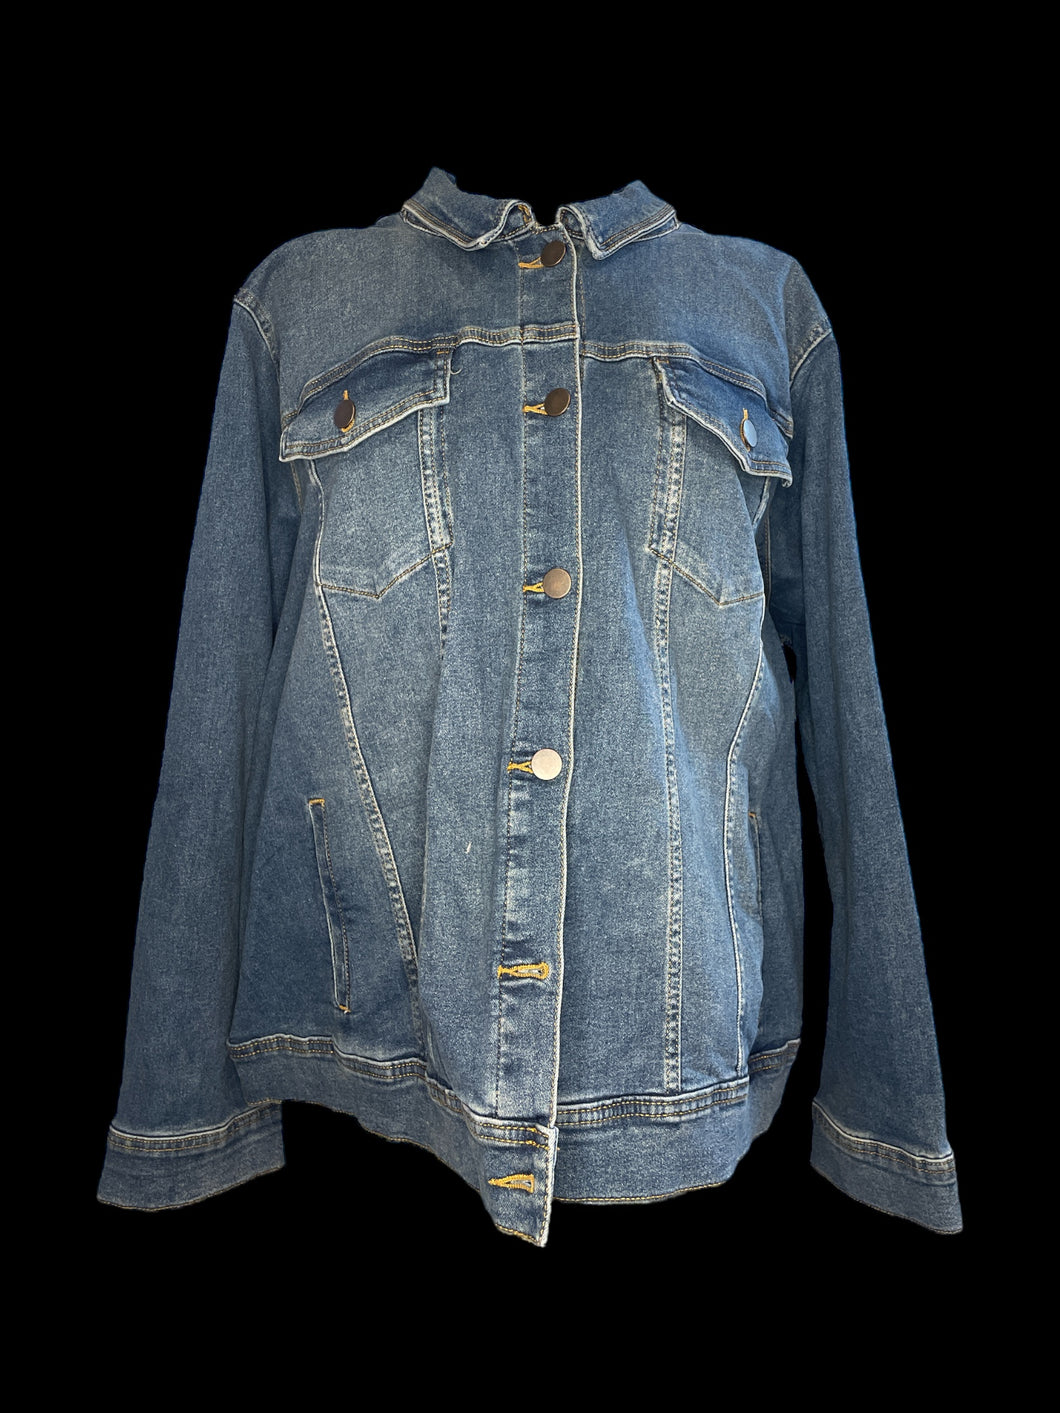 4X NWT Blue denim jacket w/ button chest pockets, side pokets, & button closure